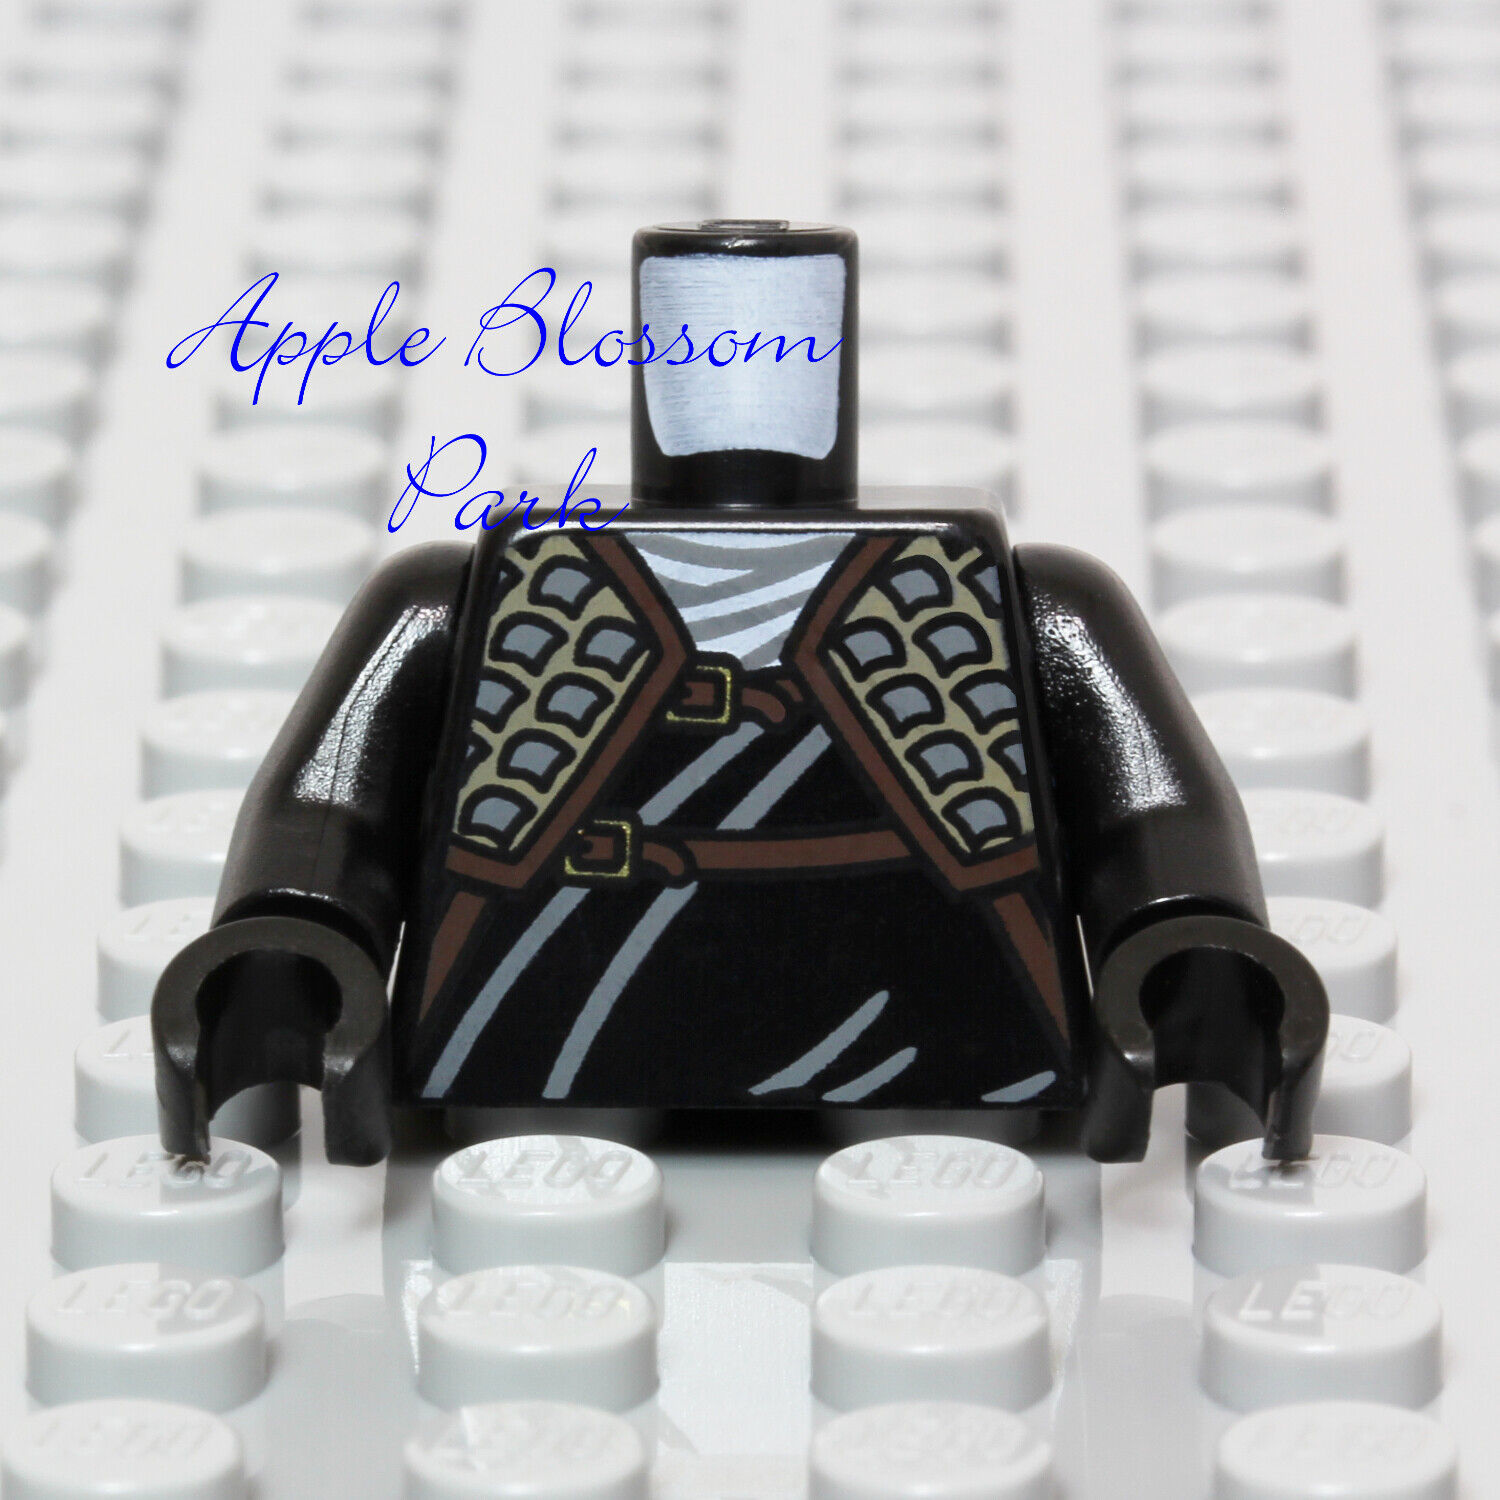 NEW Lego Ninjago BLACK VEST MINIFIG TORSO & LEGS - Ninja Cole ZX 9449 9447  9444